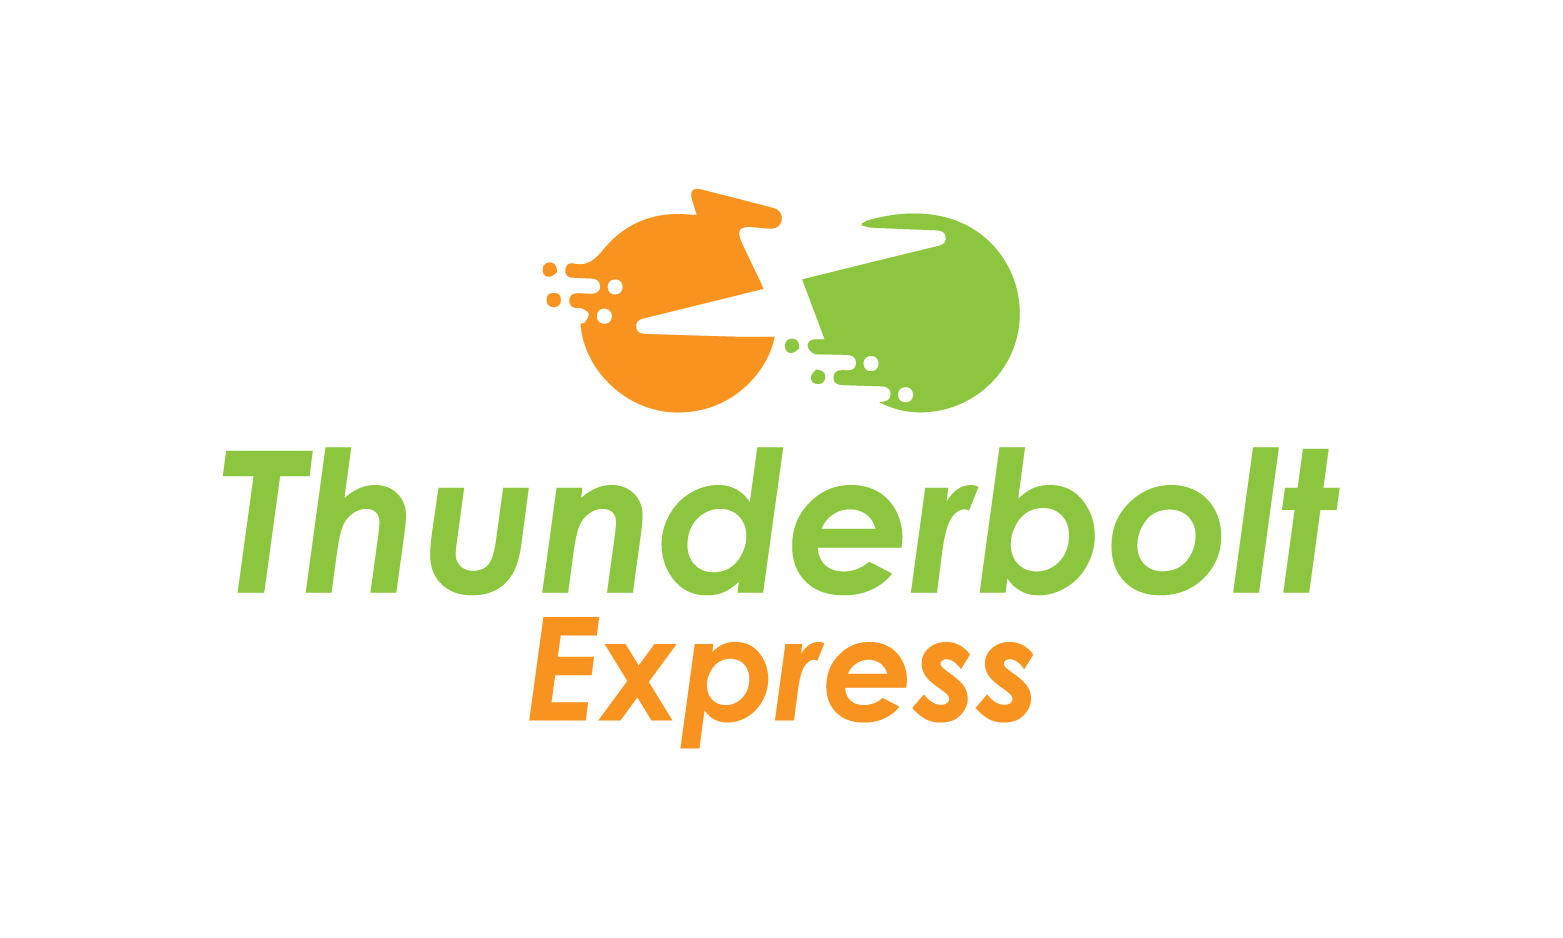 ThunderboltExpress.com - Creative brandable domain for sale